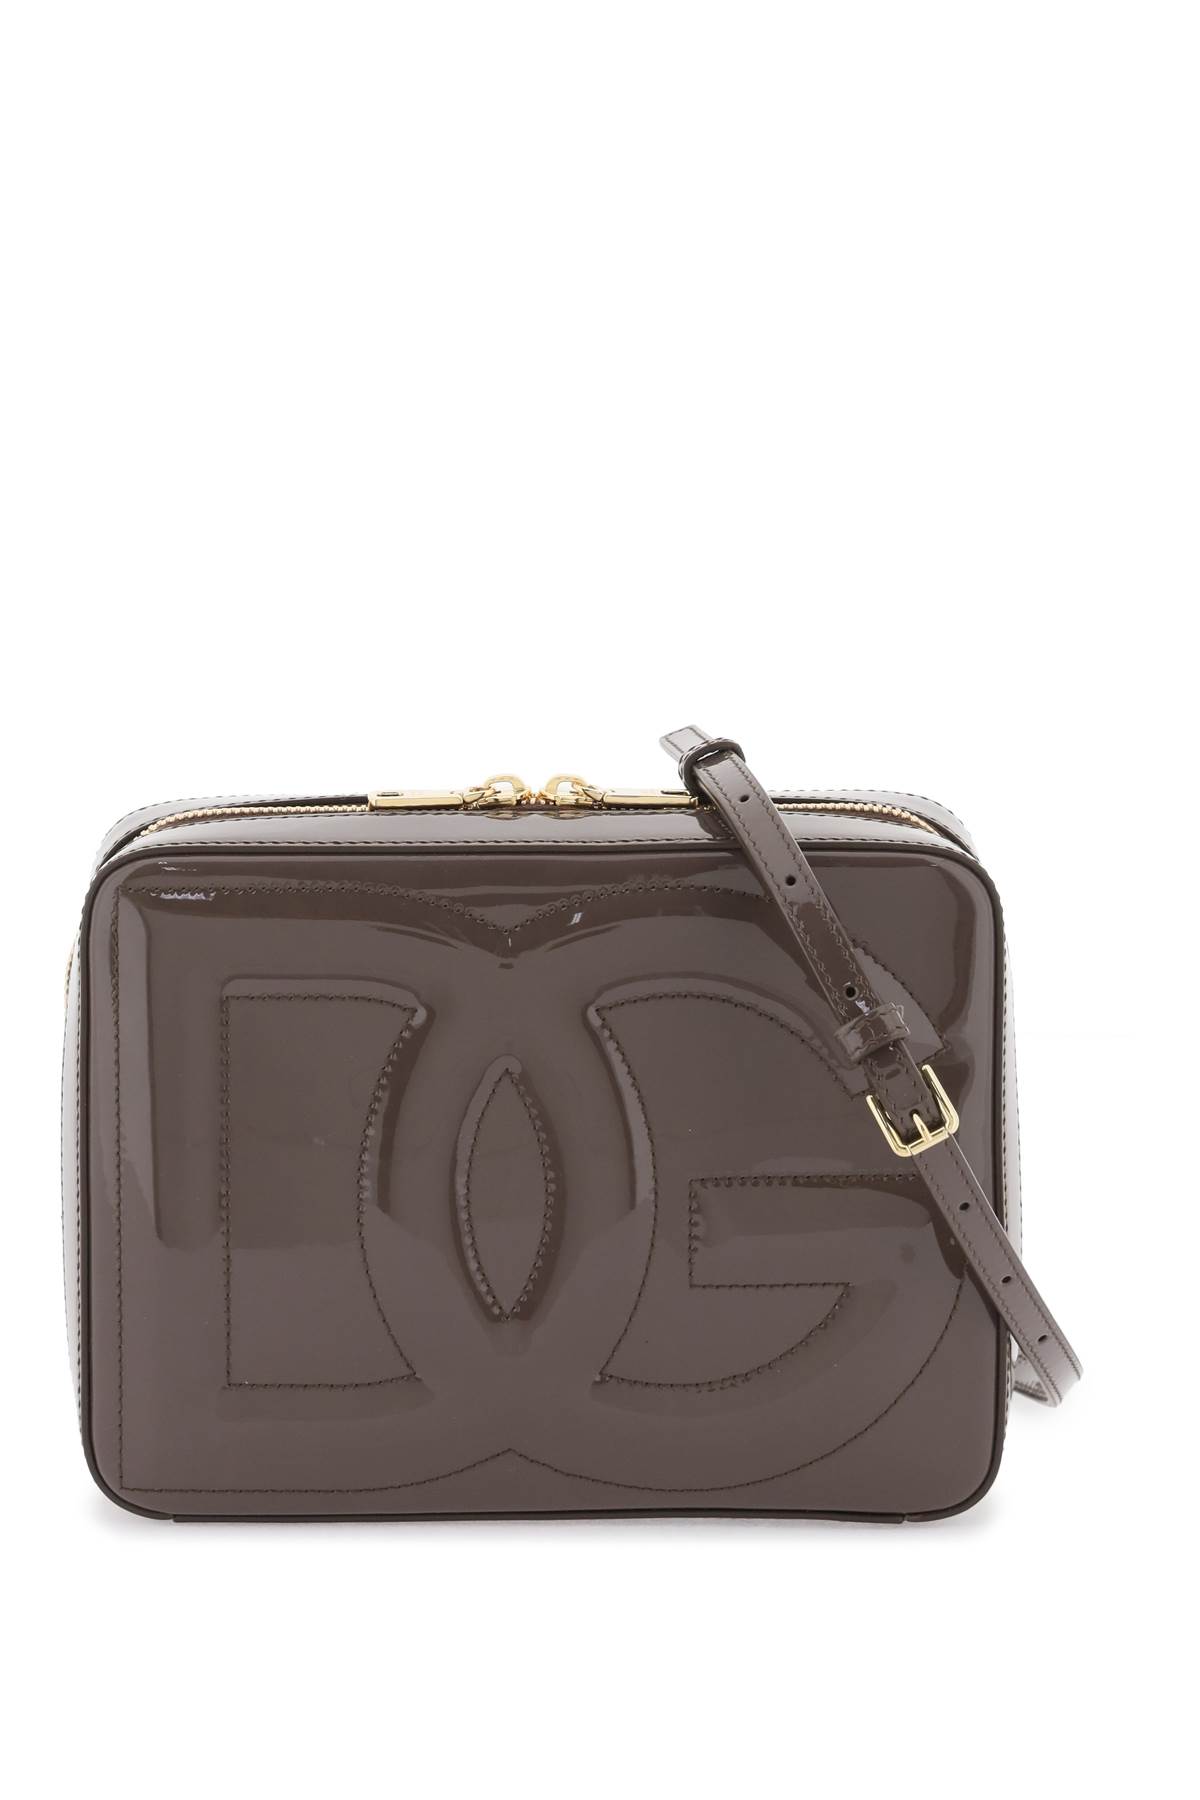 Dolce & Gabbana Medium Dg Logo Camera Bag In Fango 2 (brown)